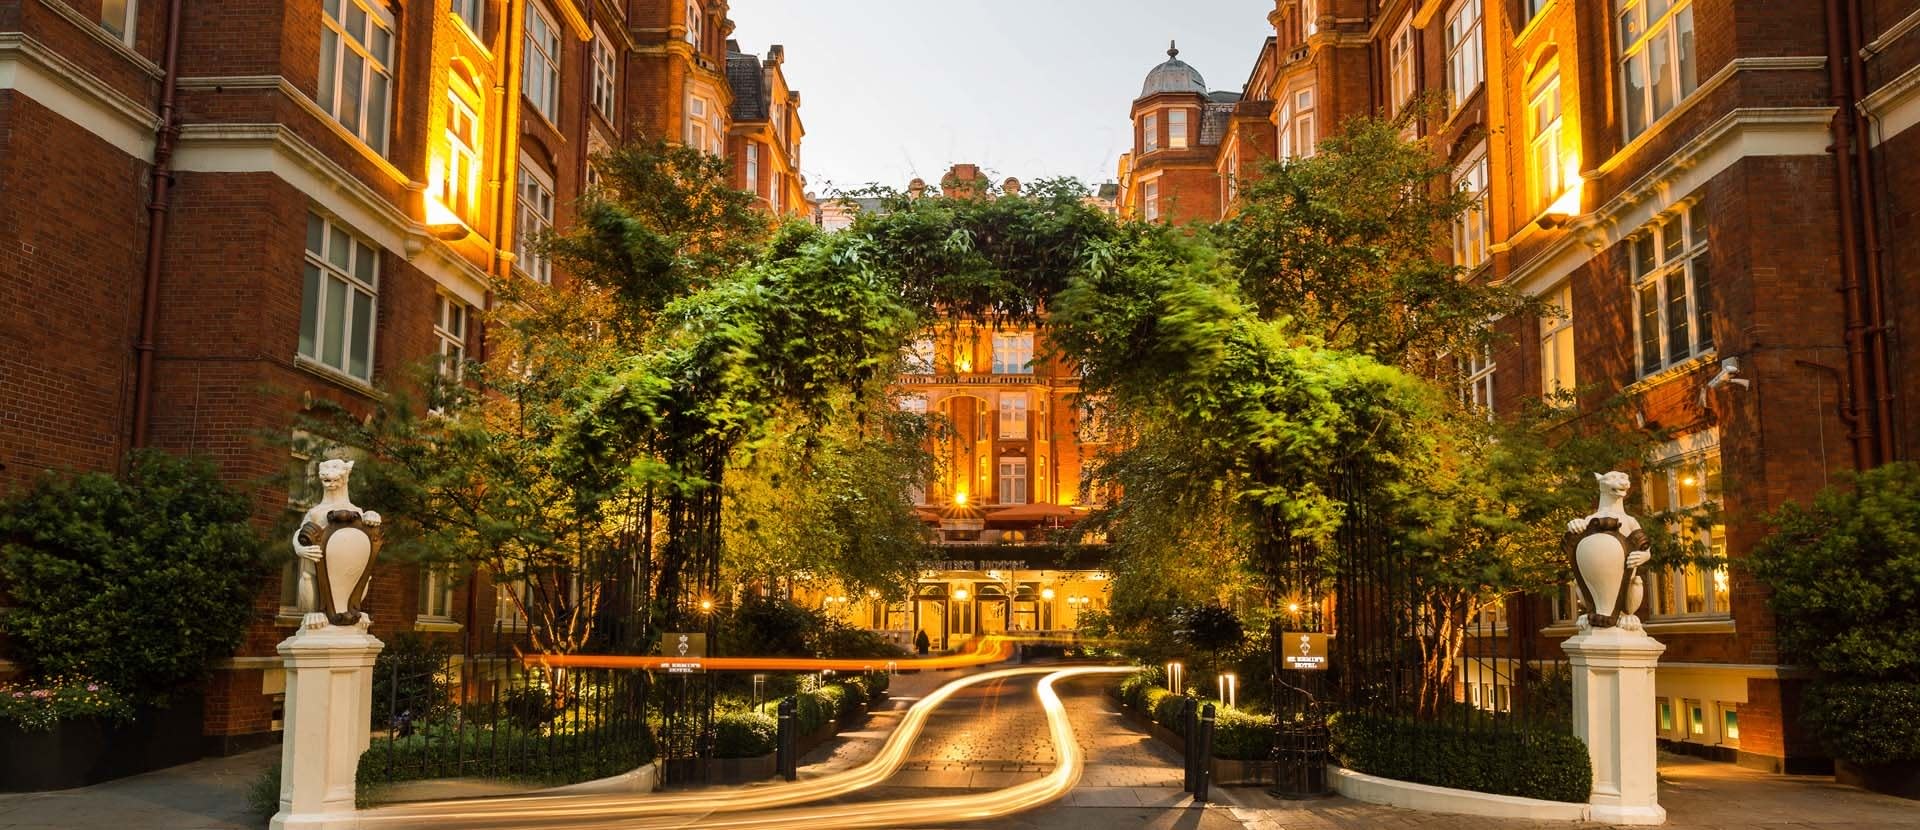 5 Luxury Hotels in London That Were Once Secret Spy Locales